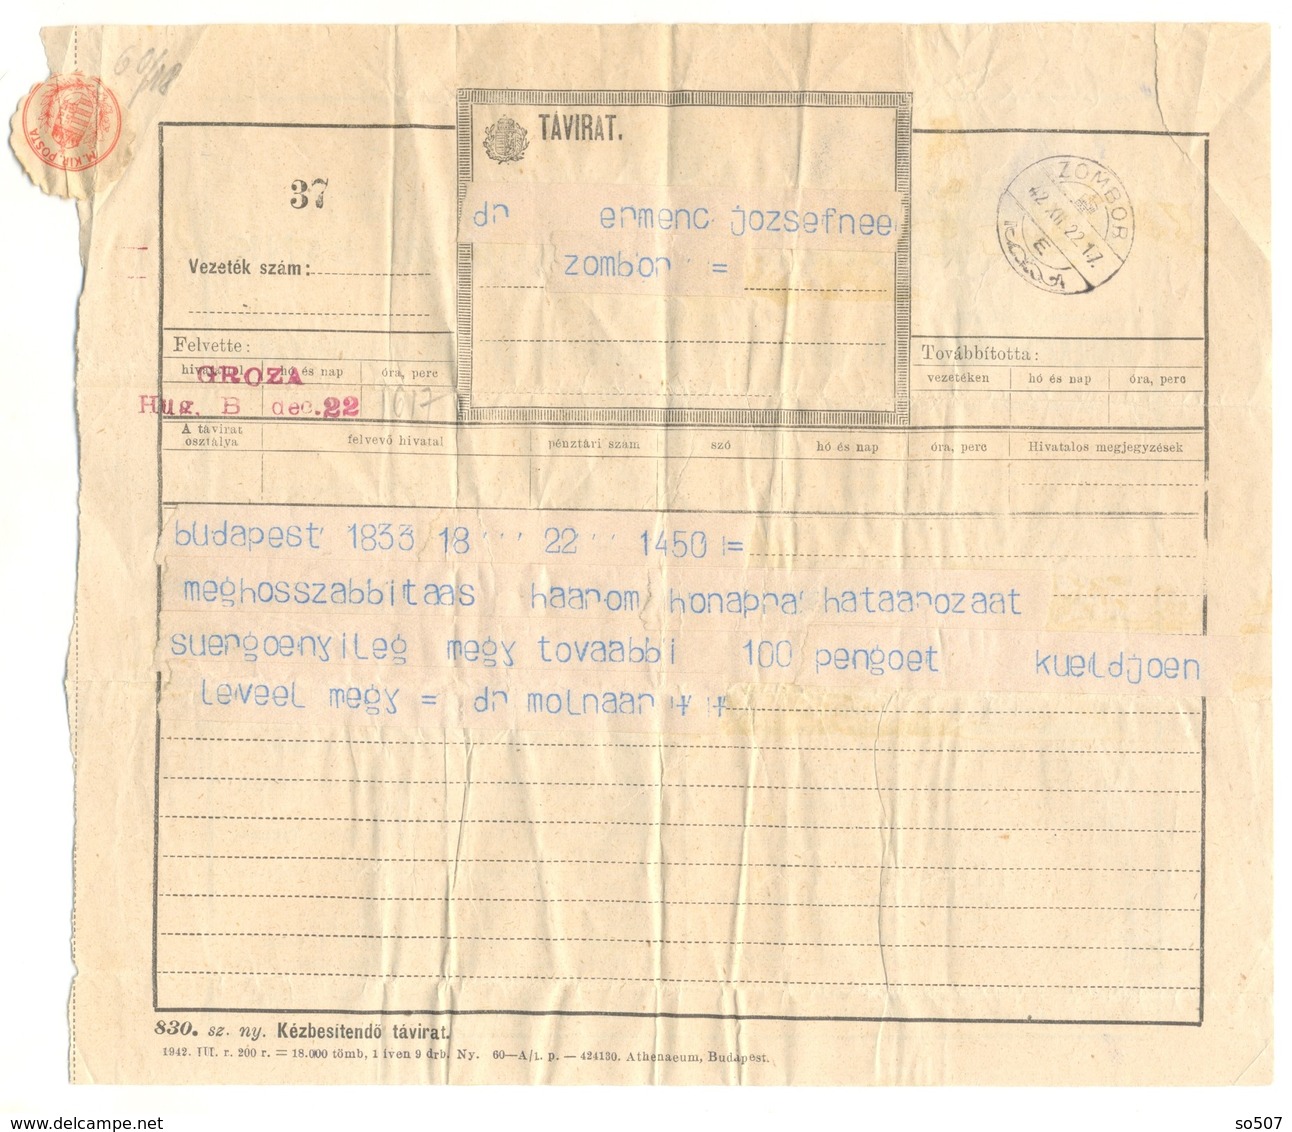 T1-Tavirat Telegram Telegraph Traveled From Dr. Molnar Hungary Budapest To Zombor Sombor Yugoslavia 1942. - Telegrafi